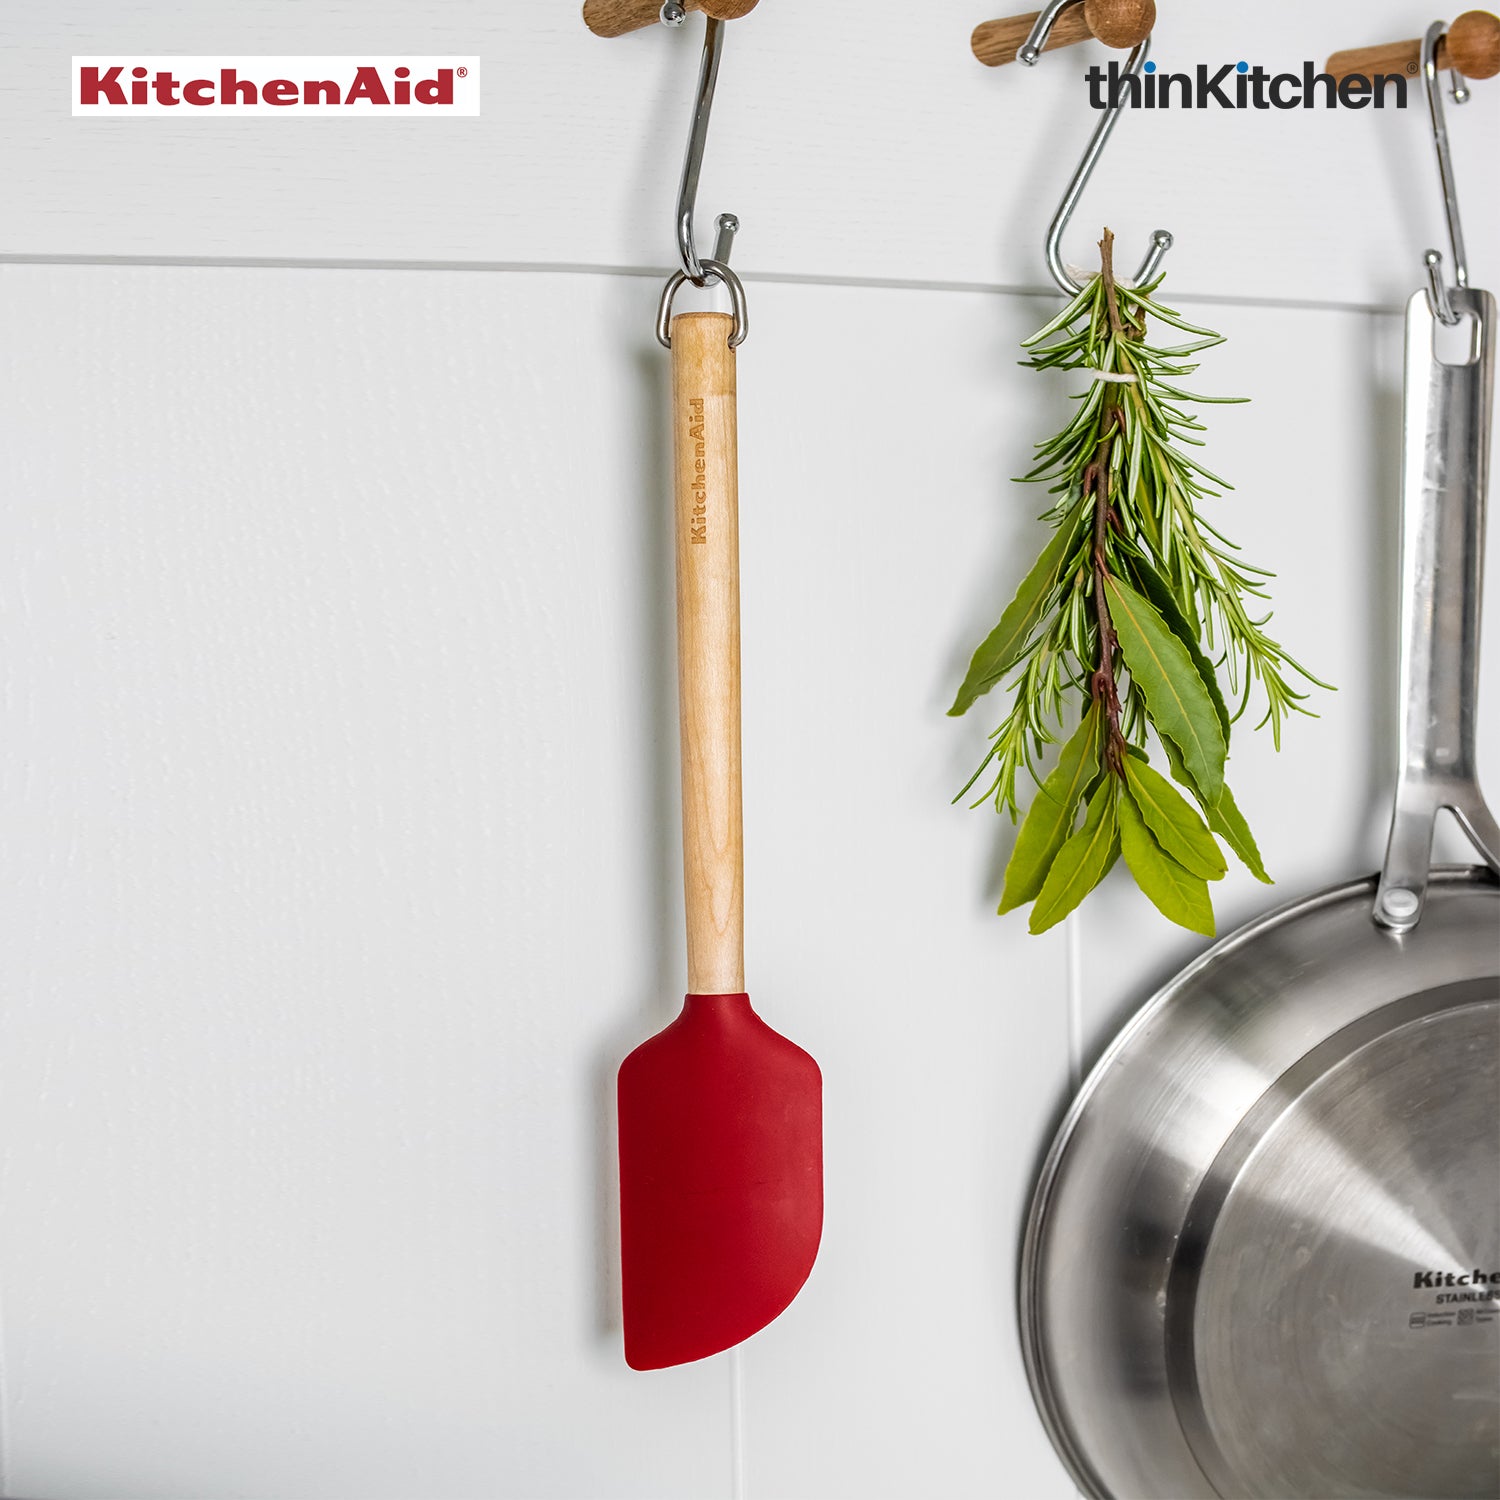 KitchenAid Gadgets KitchenAid Mini 2pc Spatula Set